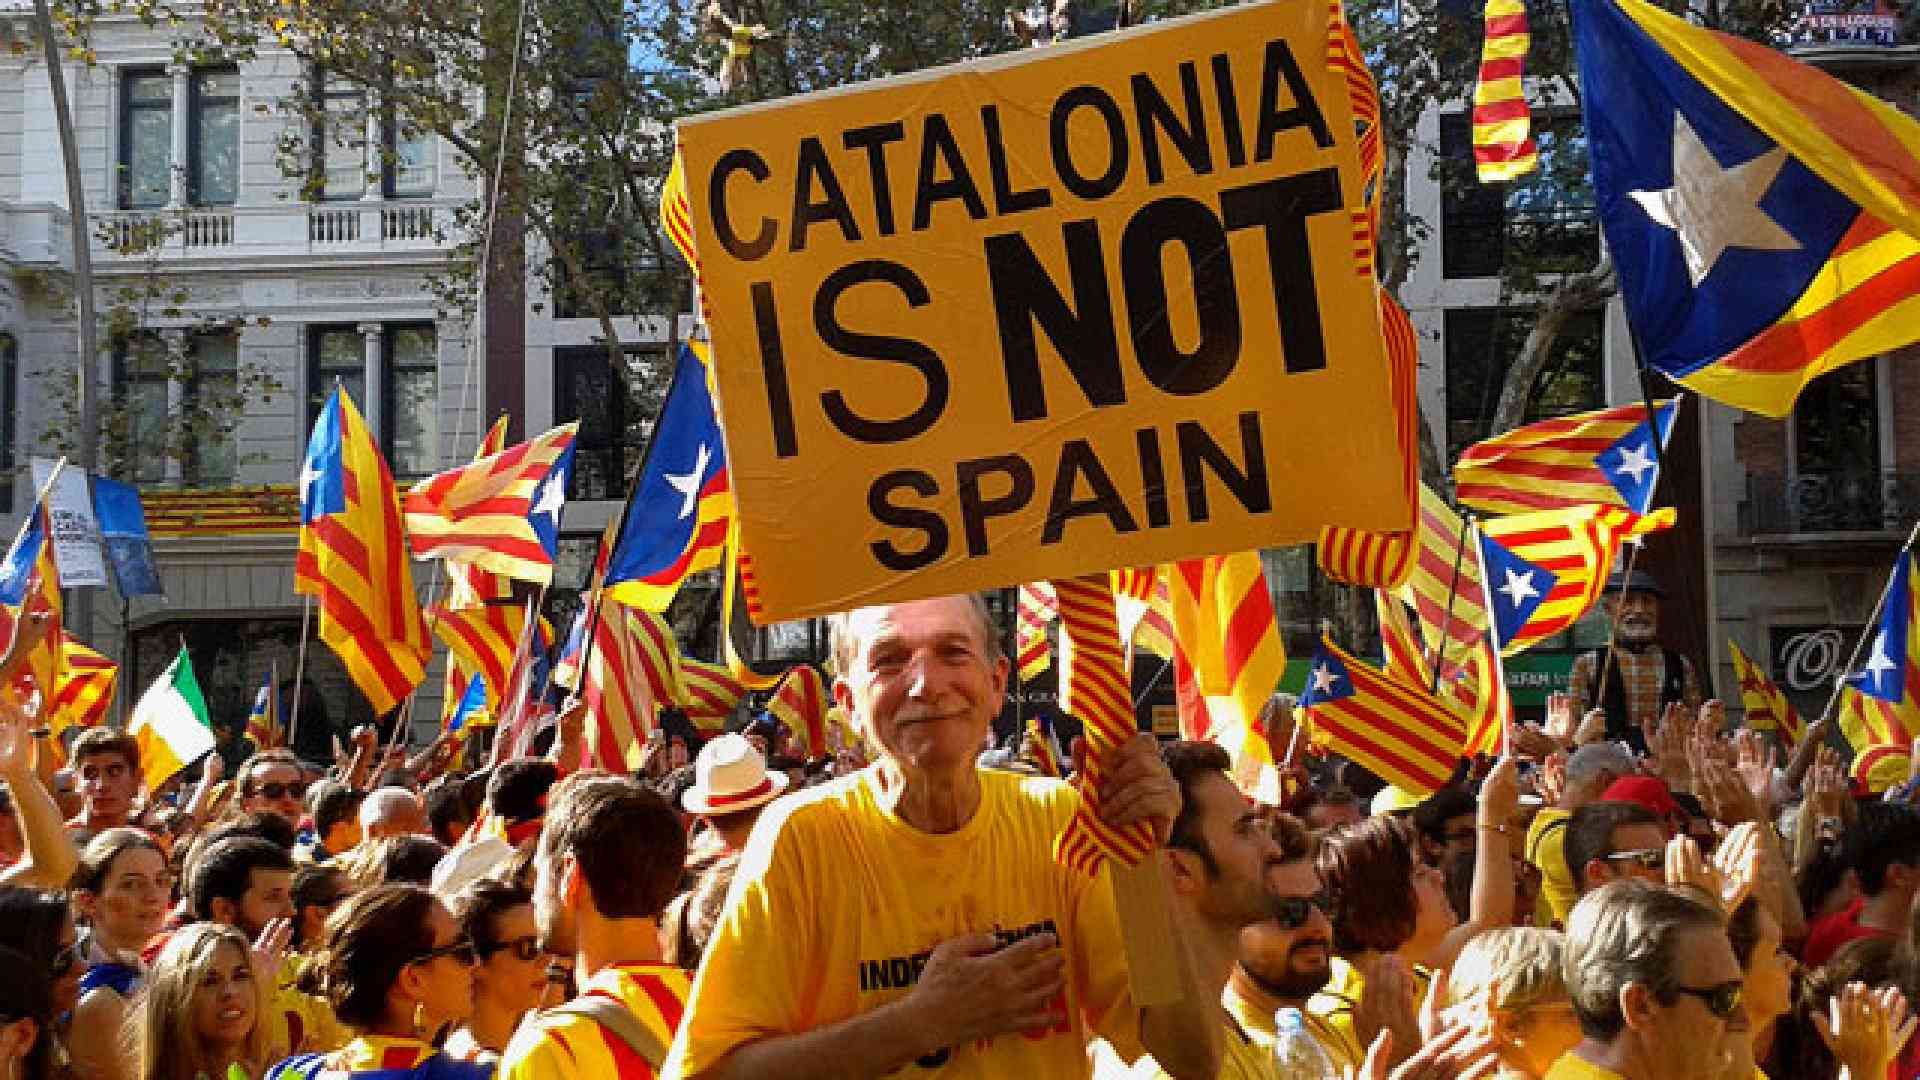 Хотят референдум. Испания независимость Каталонии. Испания vs Каталония. Каталония сепаратизм. Каталония и Испания конфликт.